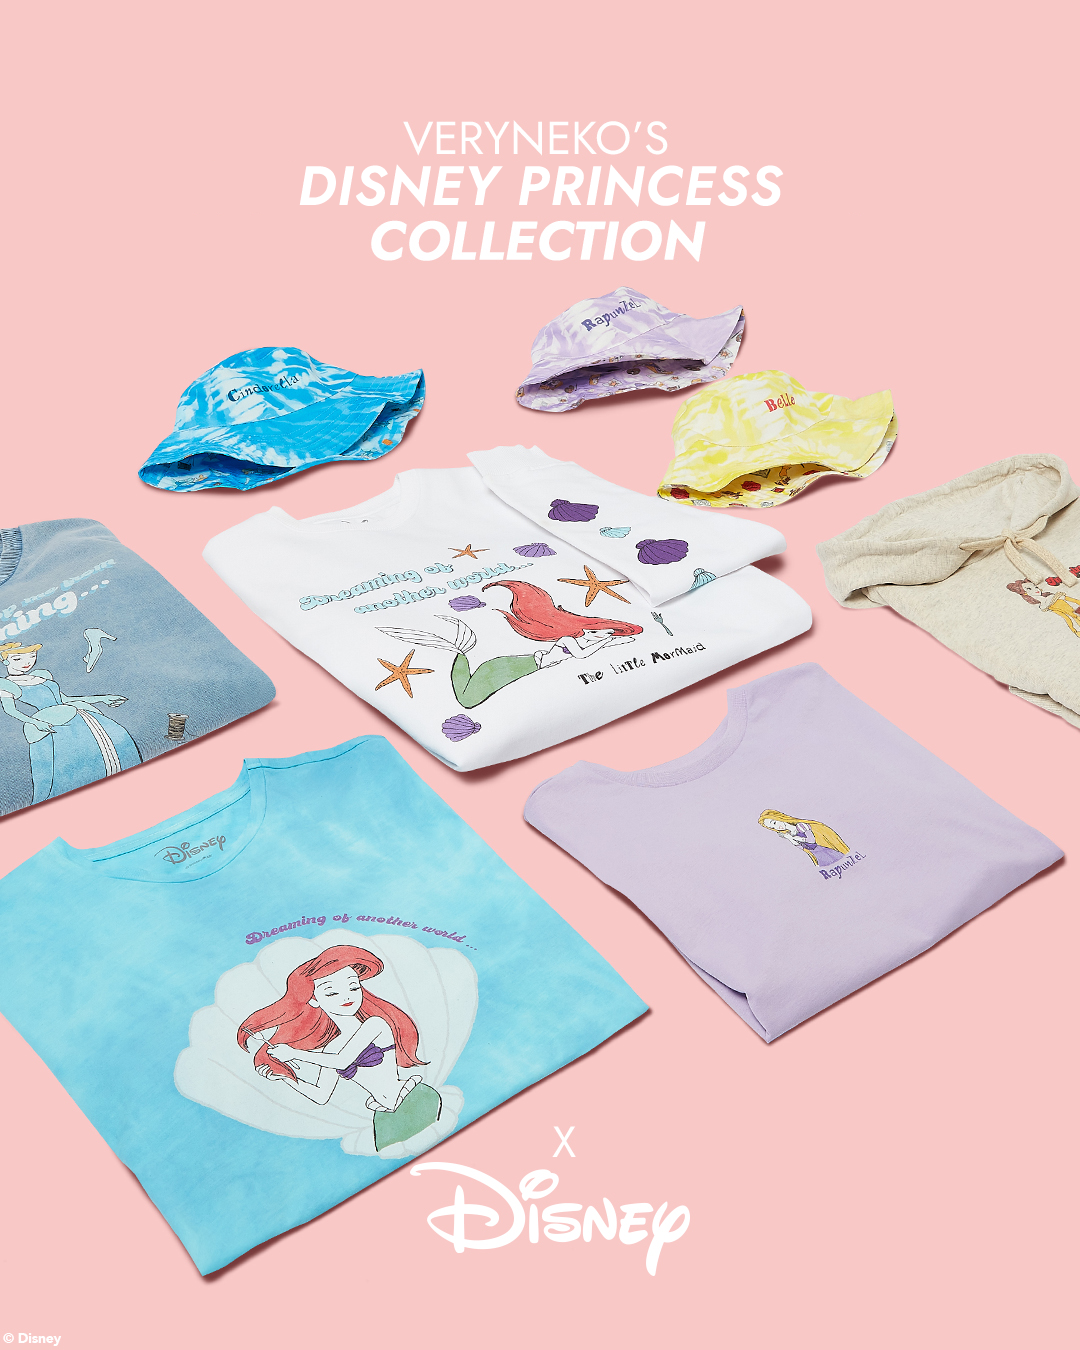 Disney Princess collection